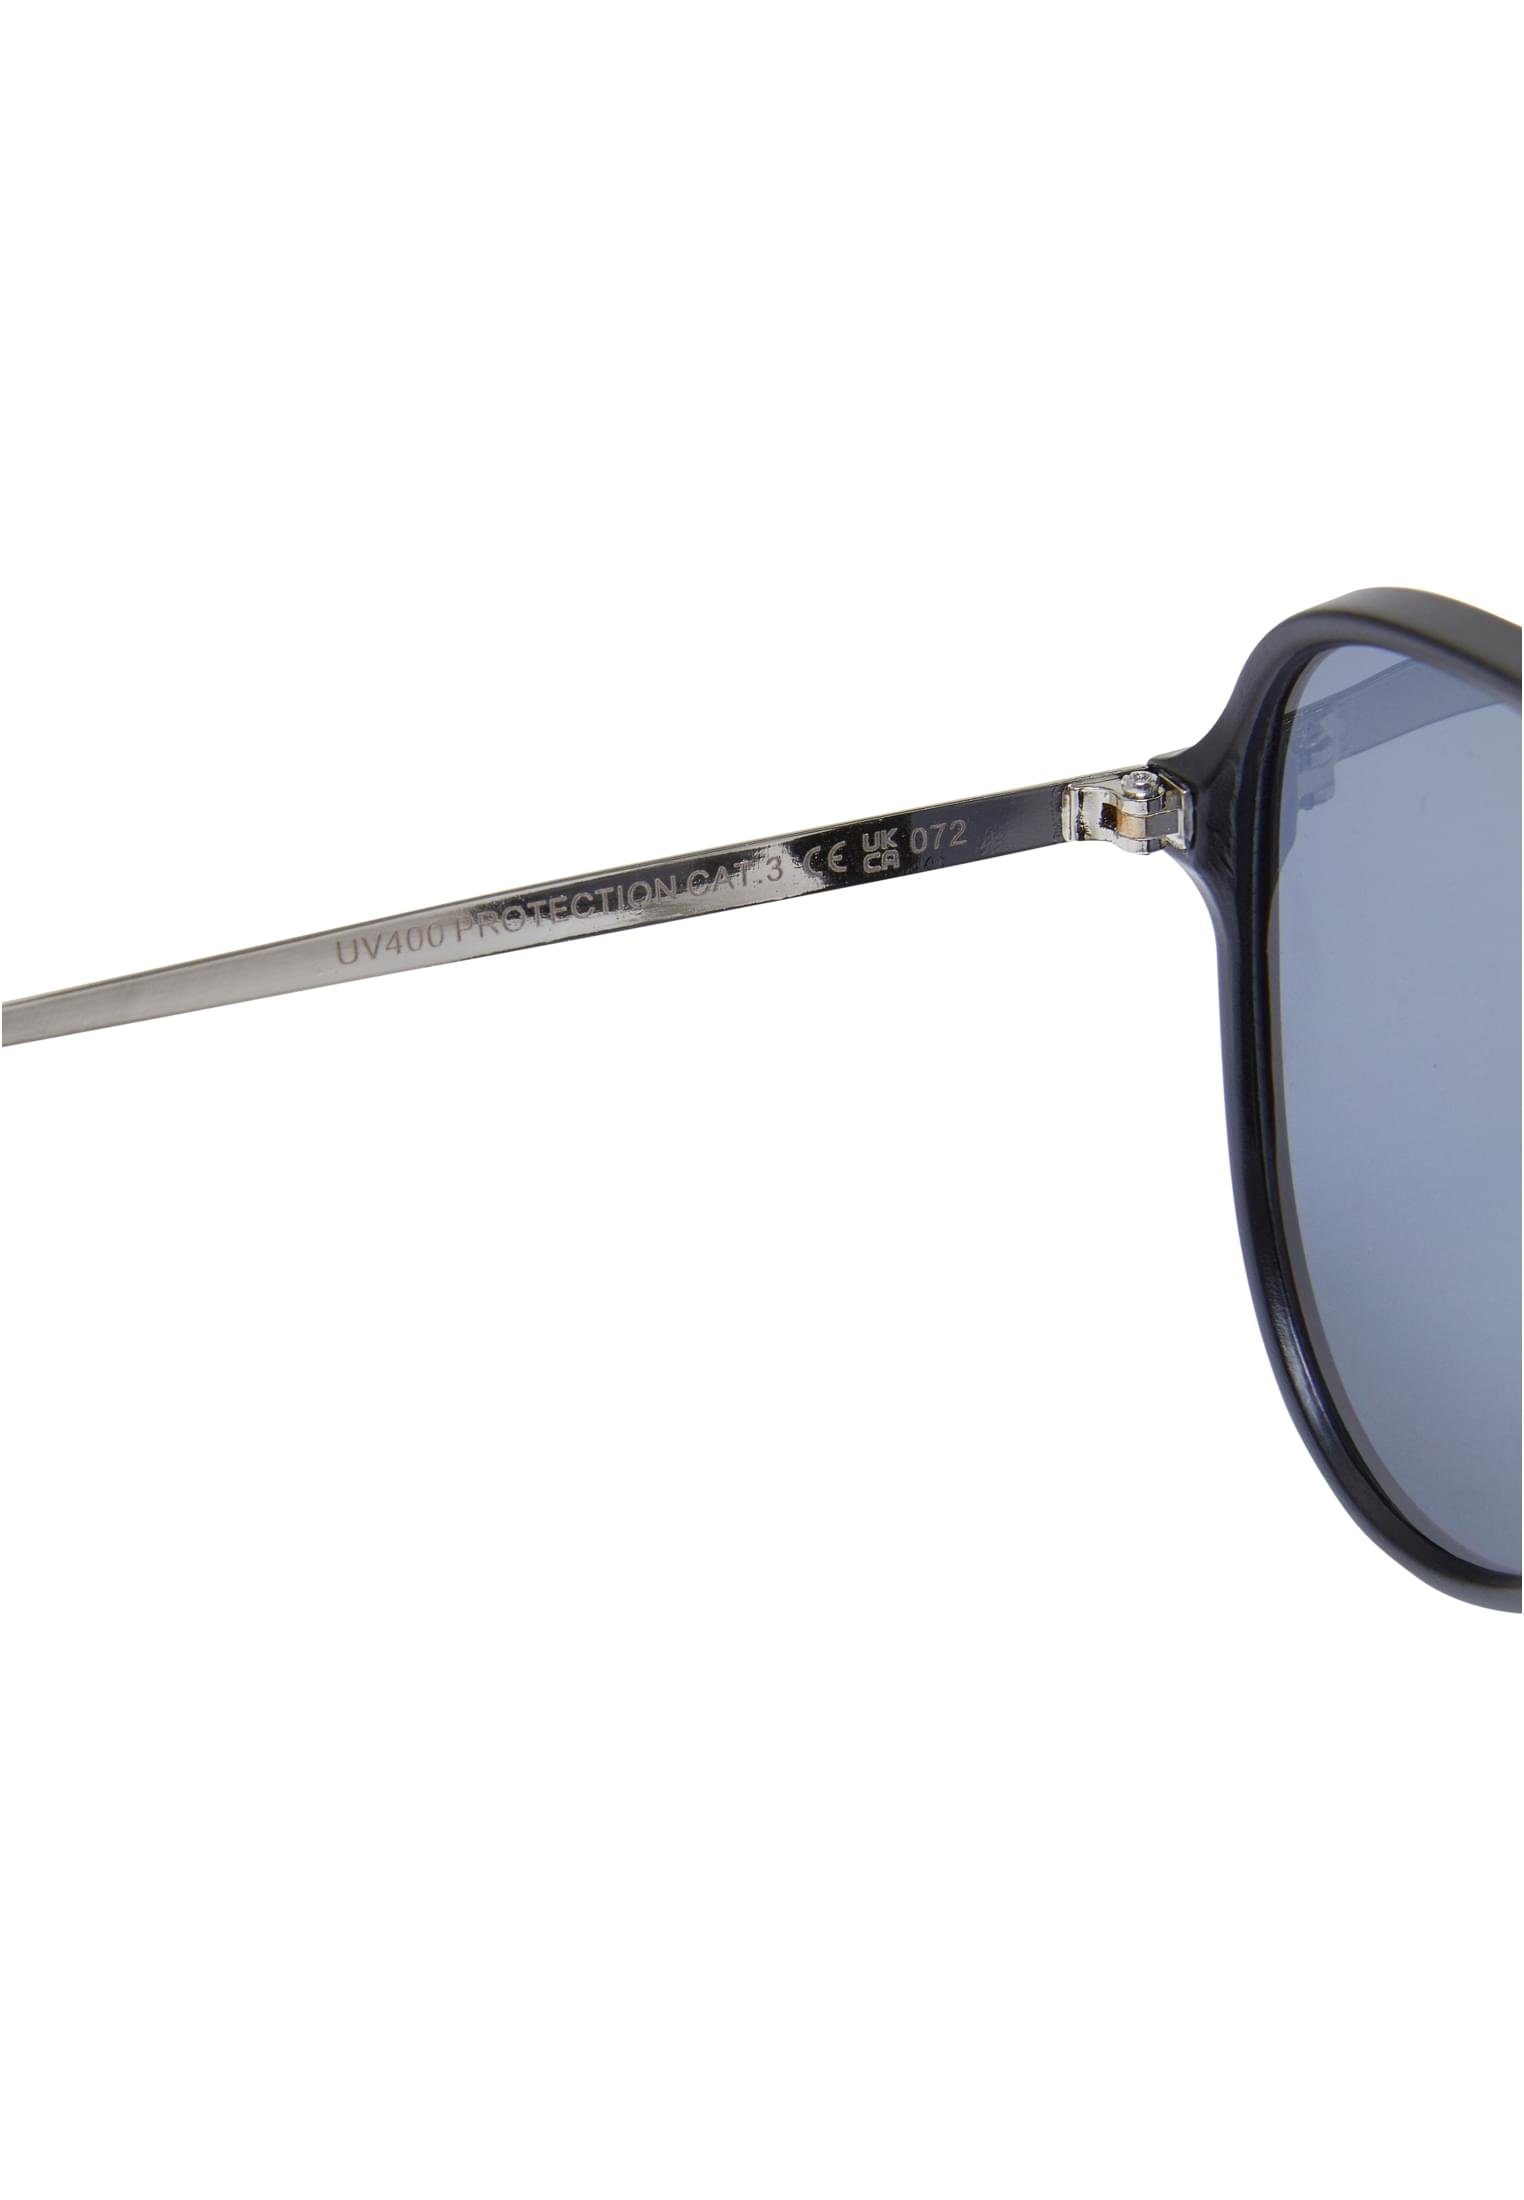 Sonnenbrille CLASSICS URBAN Sunglasses Osaka Unisex black/silver